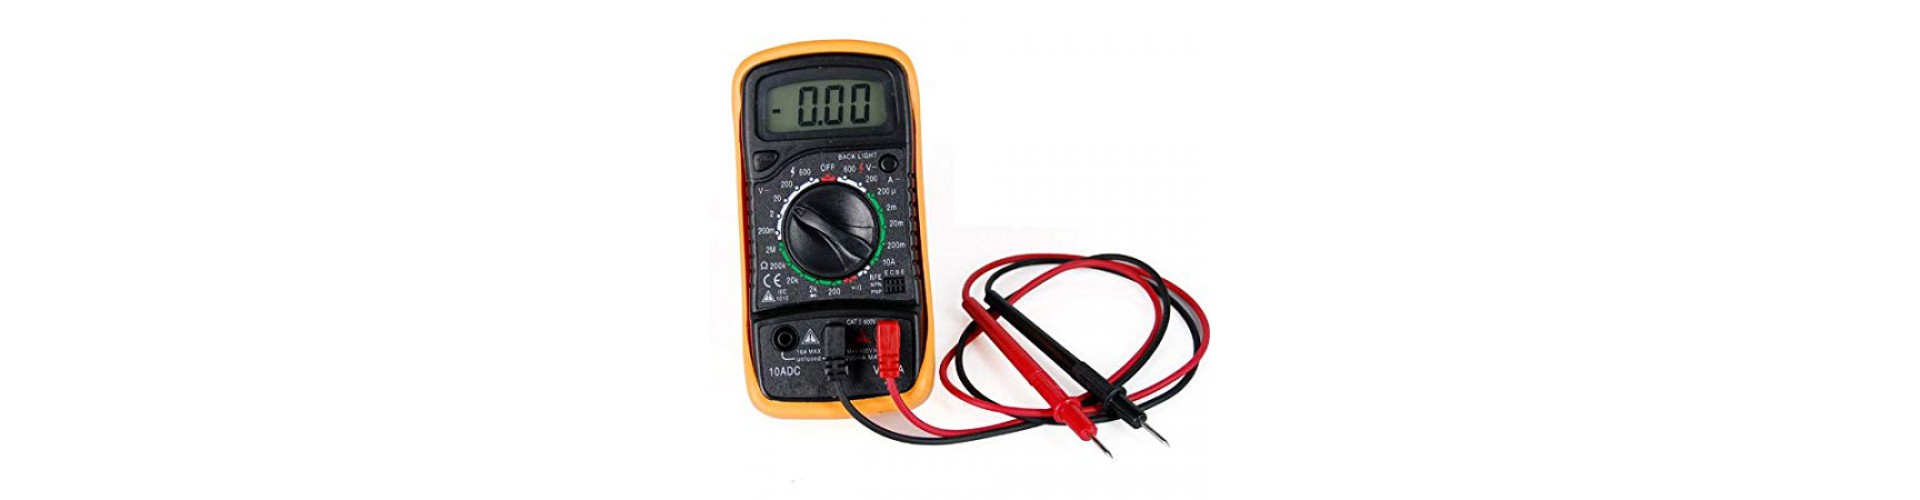 Electrical Testers | Meters | Scales | Measuring Tools